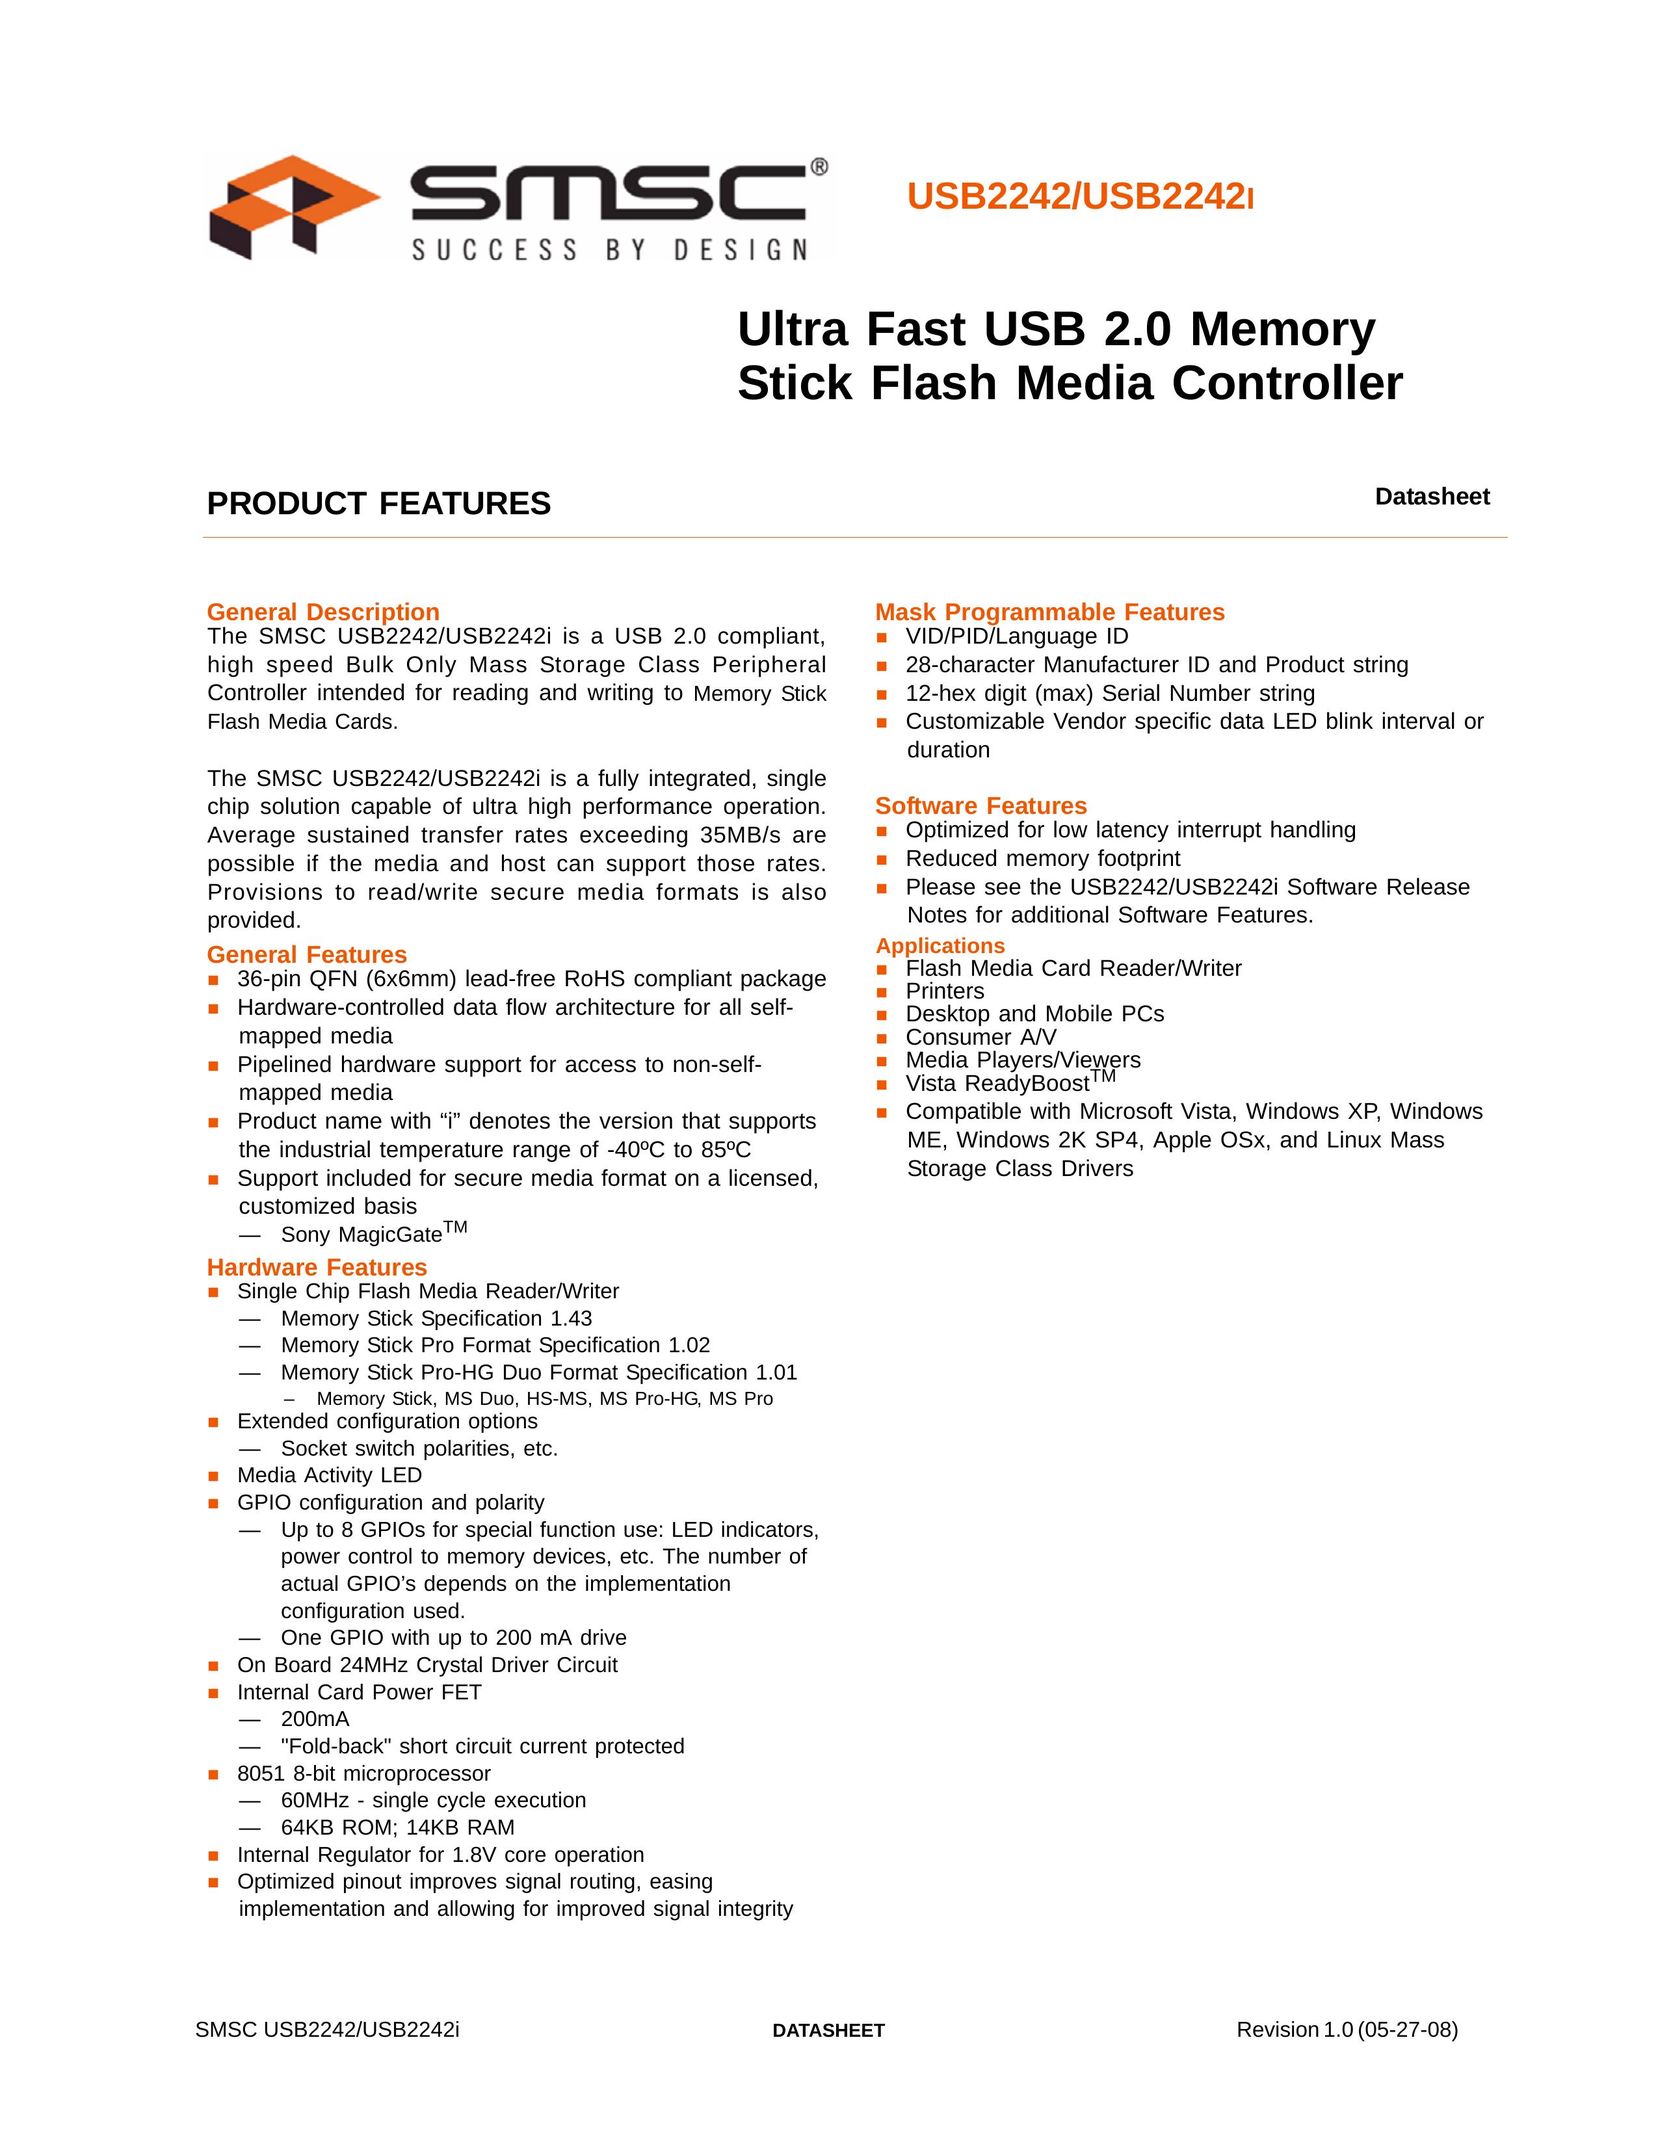 SMSC USB2242 Computer Drive User Manual